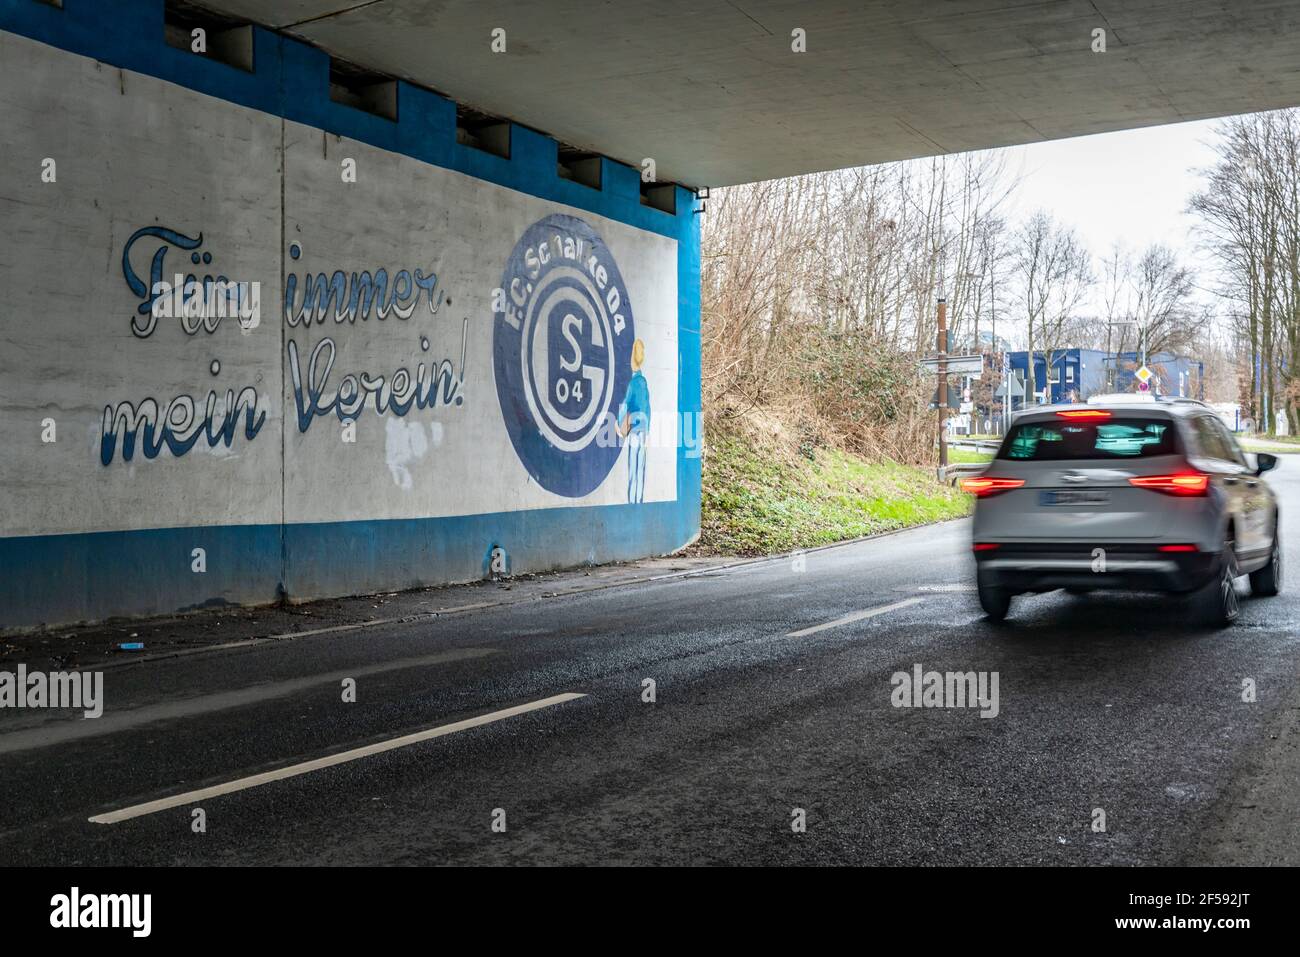 Fresque, peinture des fans du club Bundesliga FC Schalke 04, au stade Schalke, Veltins Arena, tunnel routier, à Gelsenkirchen, NRW, Allemagne Banque D'Images